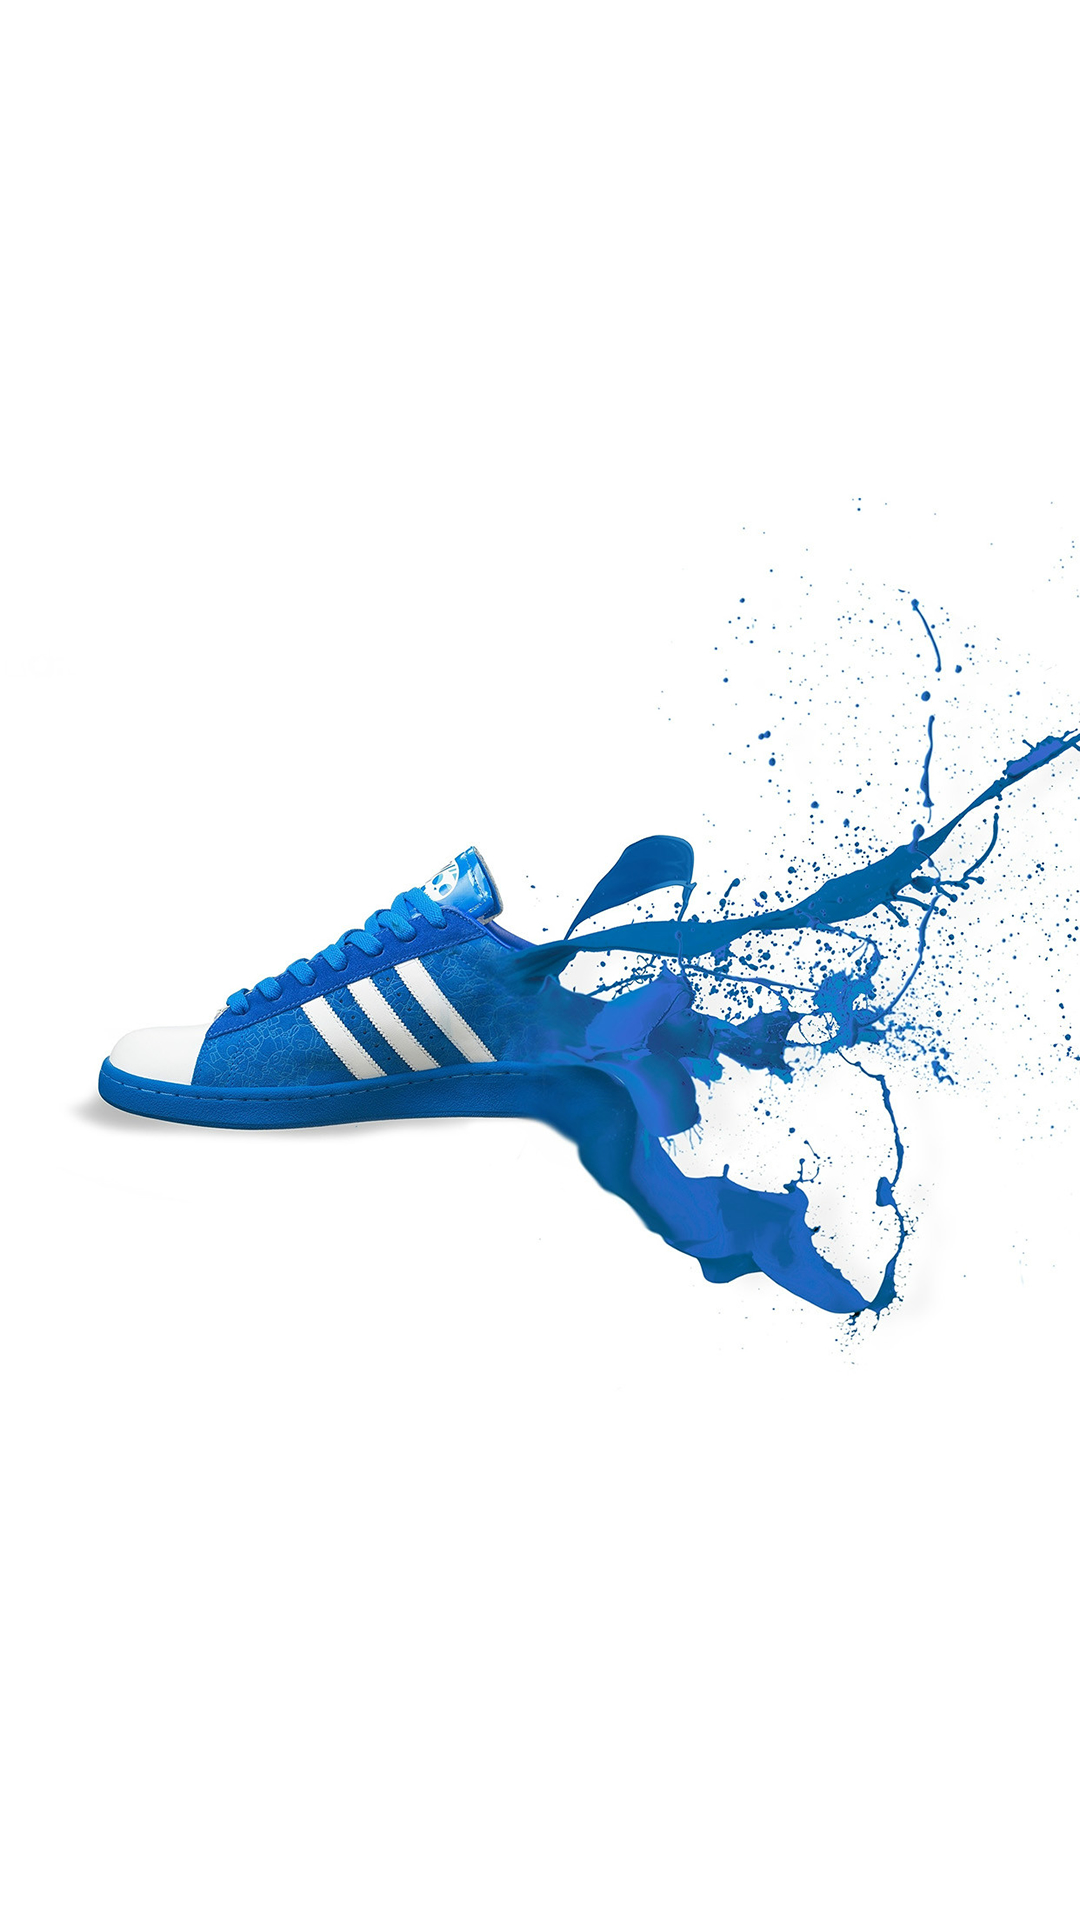 nwa iphone wallpaper,blue,footwear,electric blue,shoe,sneakers